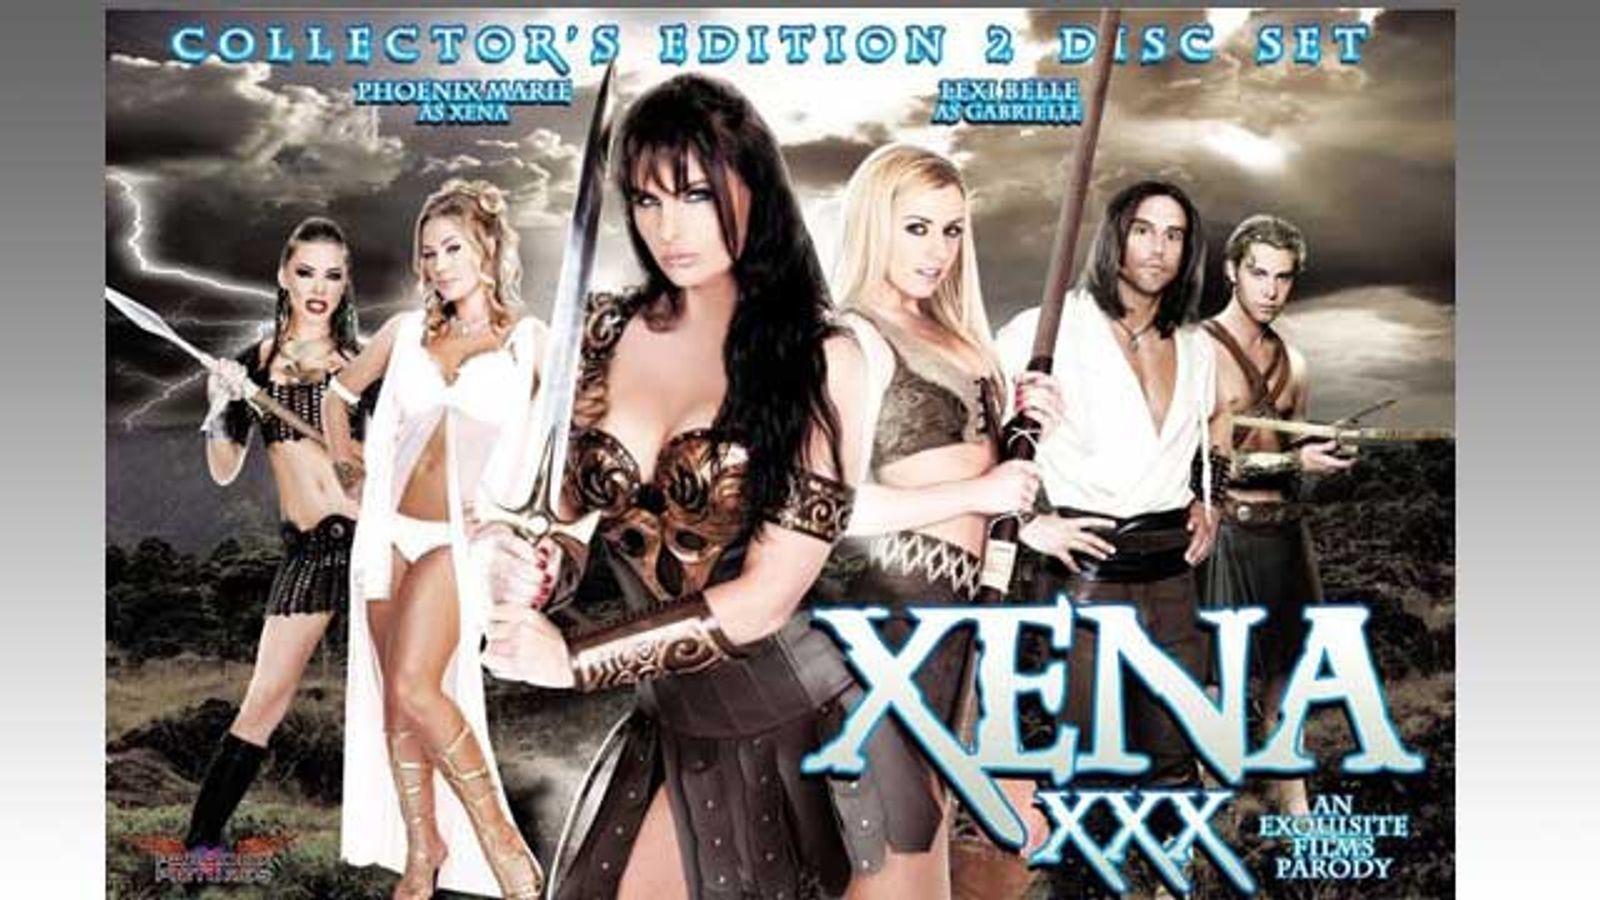 'Xena XXX: An Exquisite Films Parody' SFW Trailer Debuts